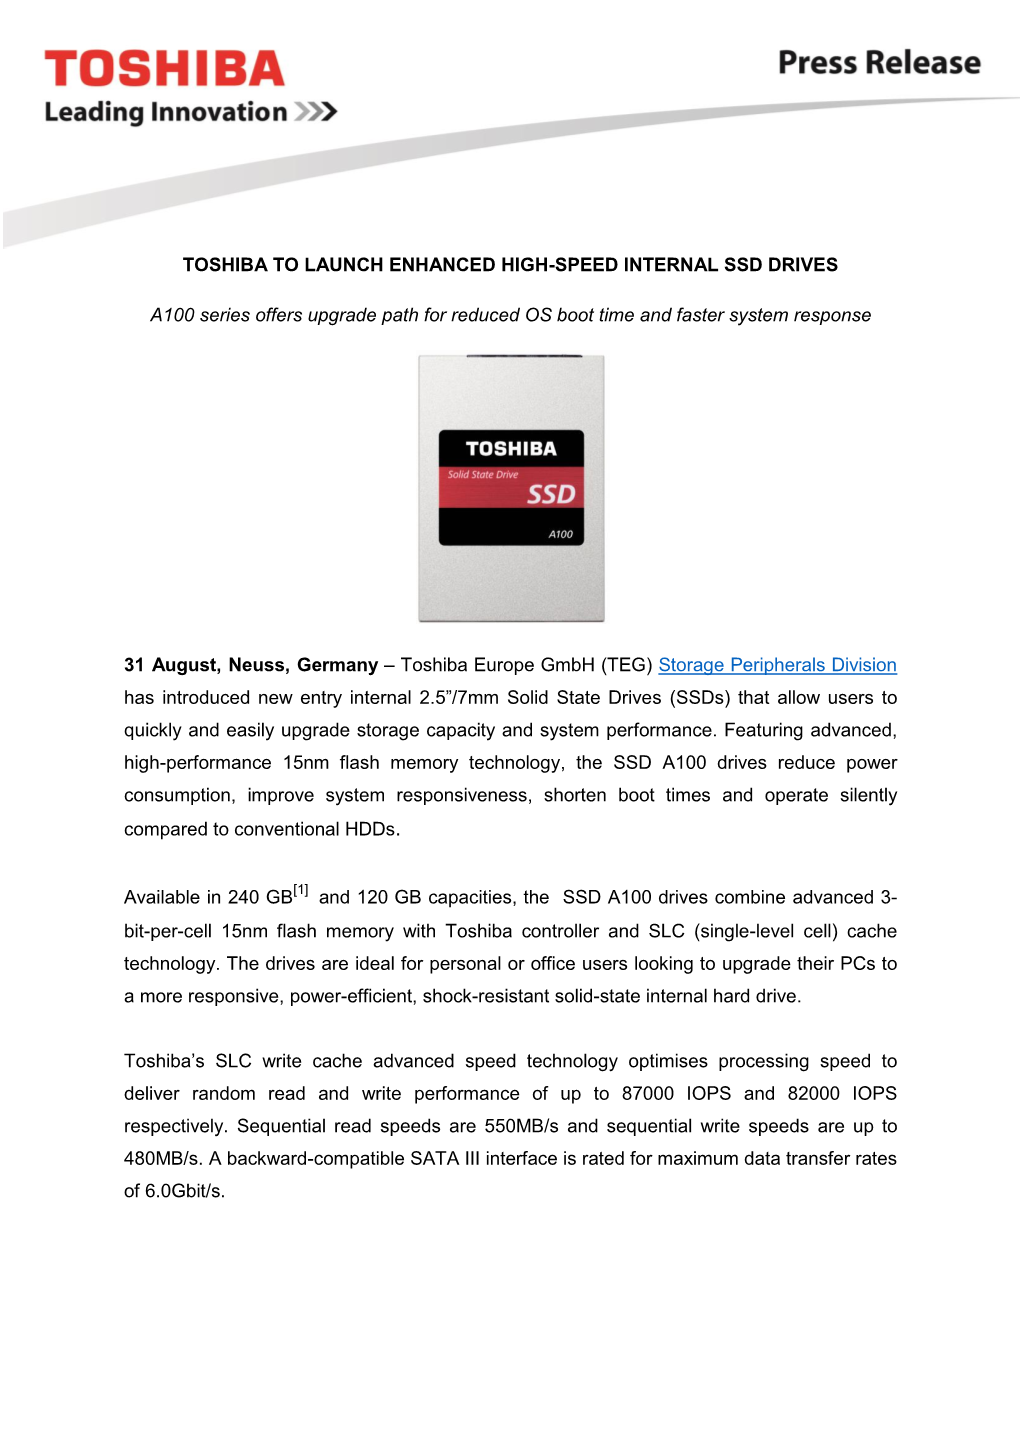 Toshiba to Launch Enhanced High-Speed Internal Ssd Drives